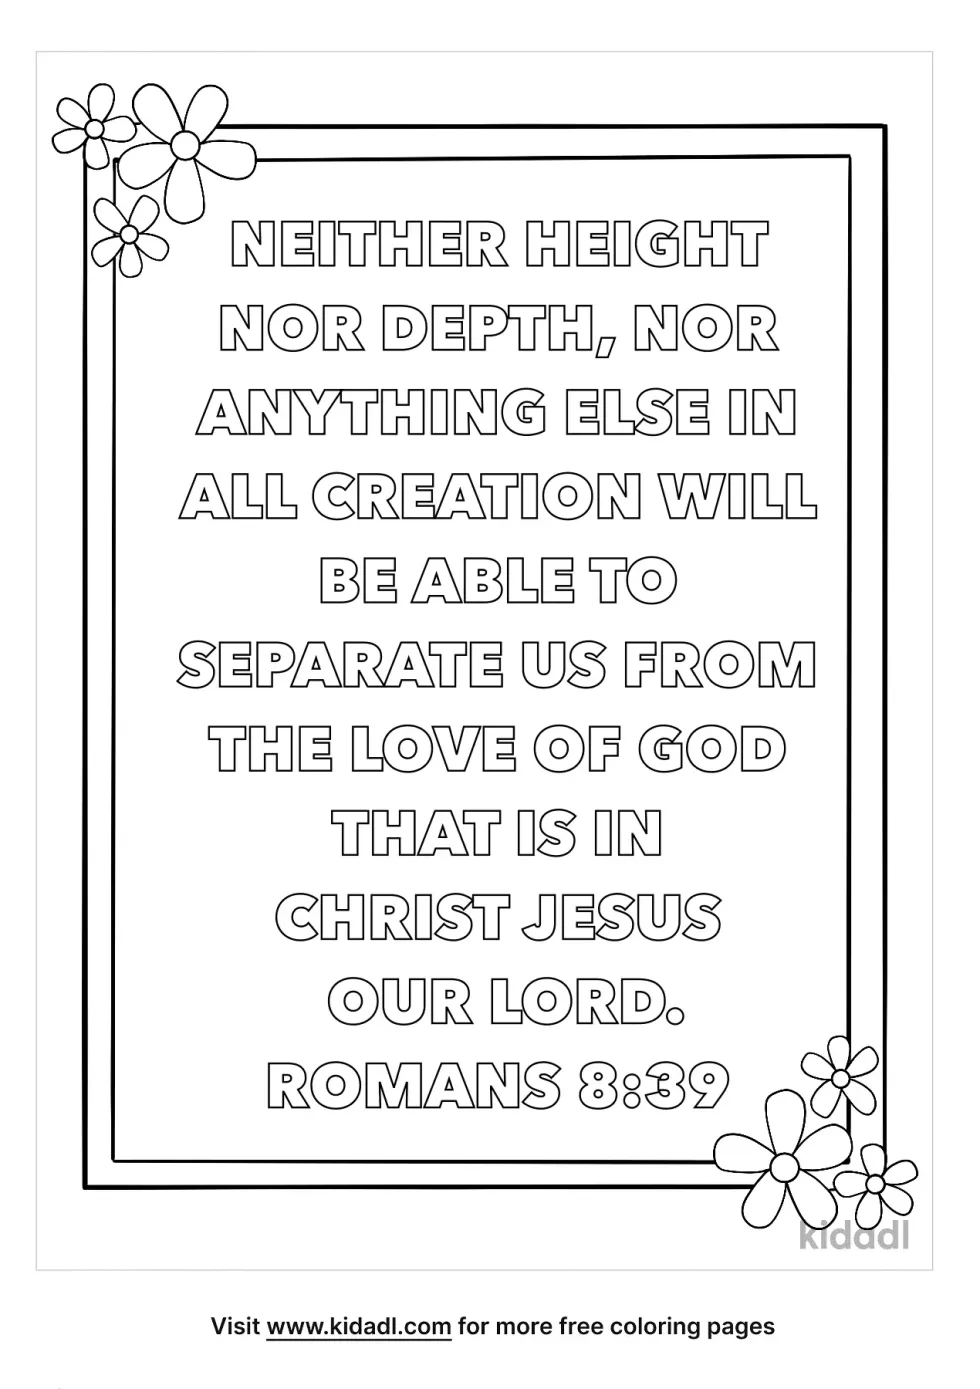 Romans 8:39 Coloring Page